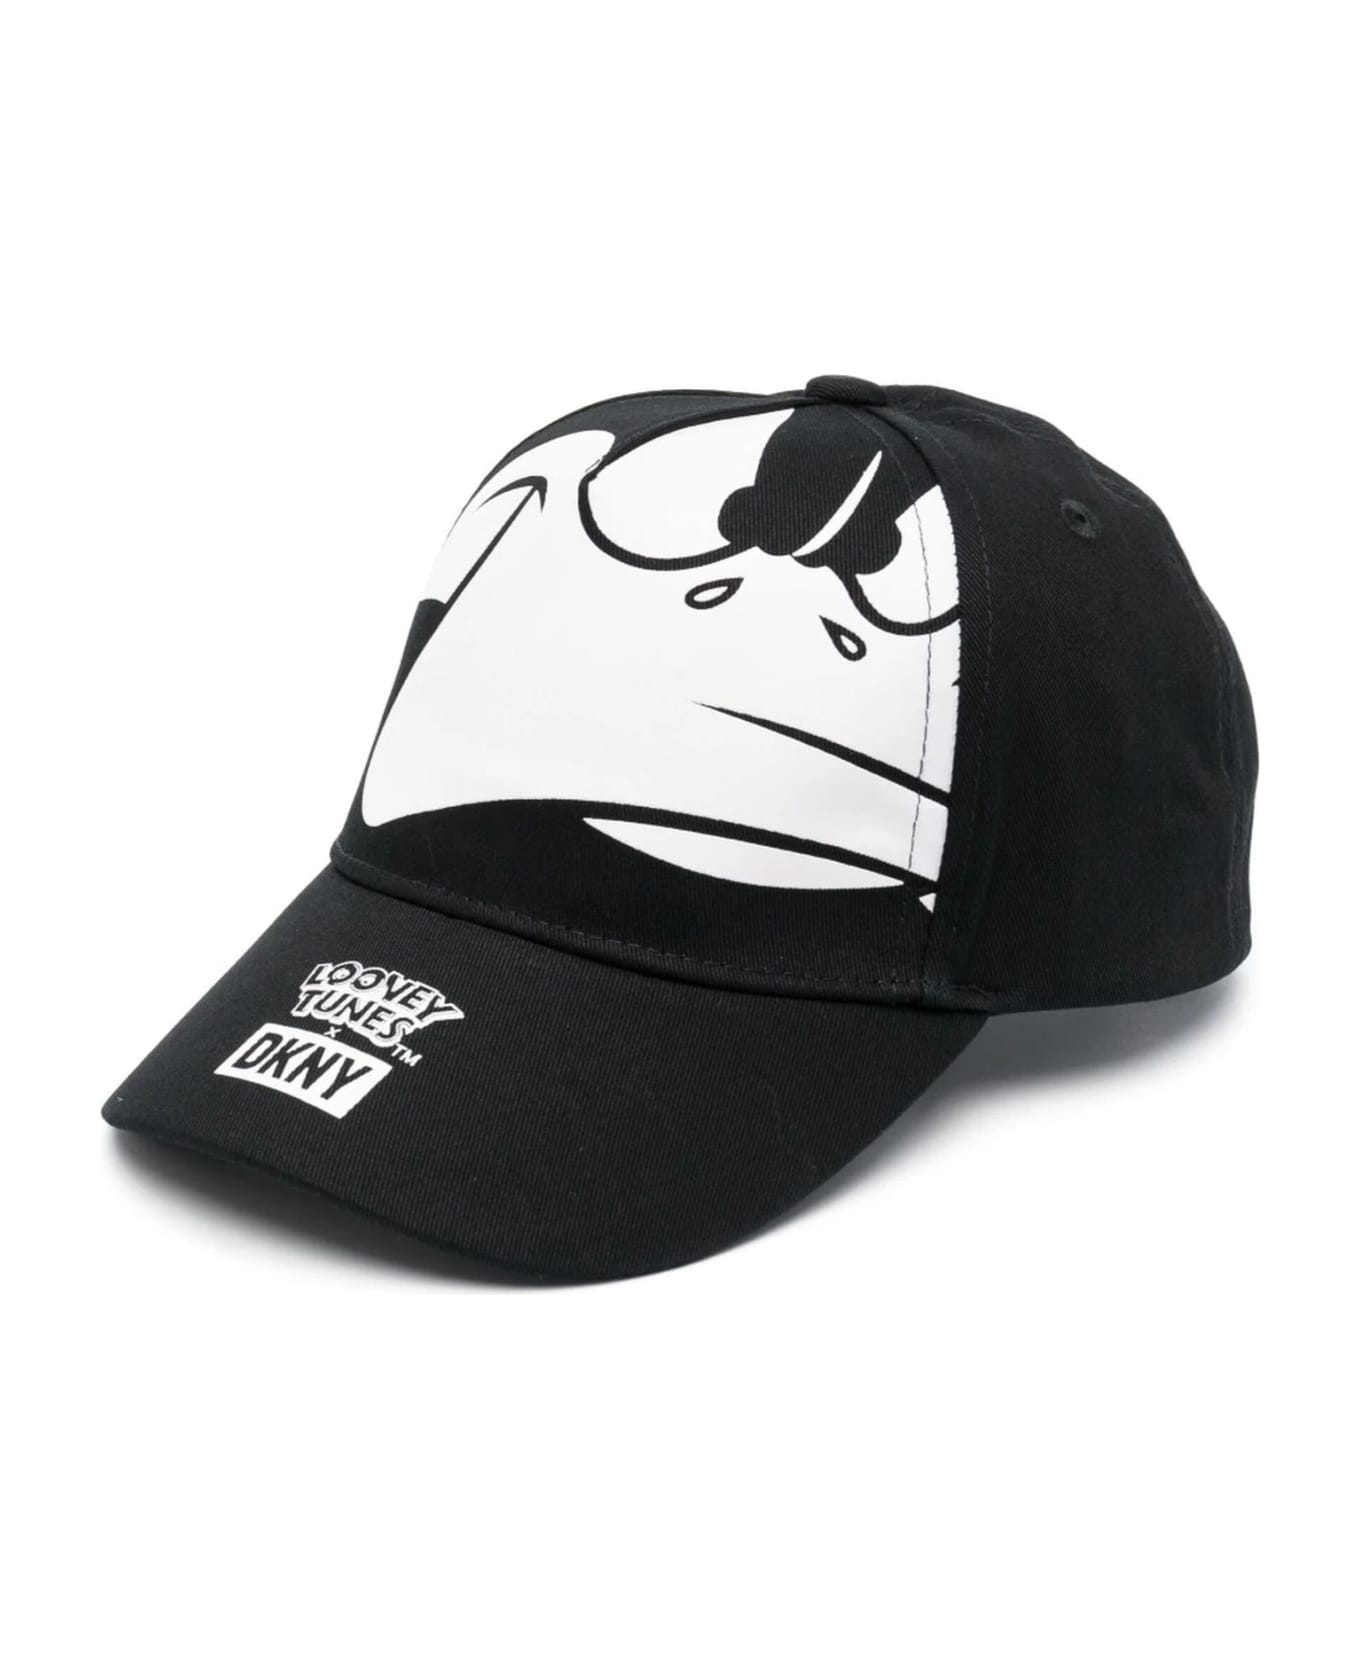 DKNY Hats Black - Black